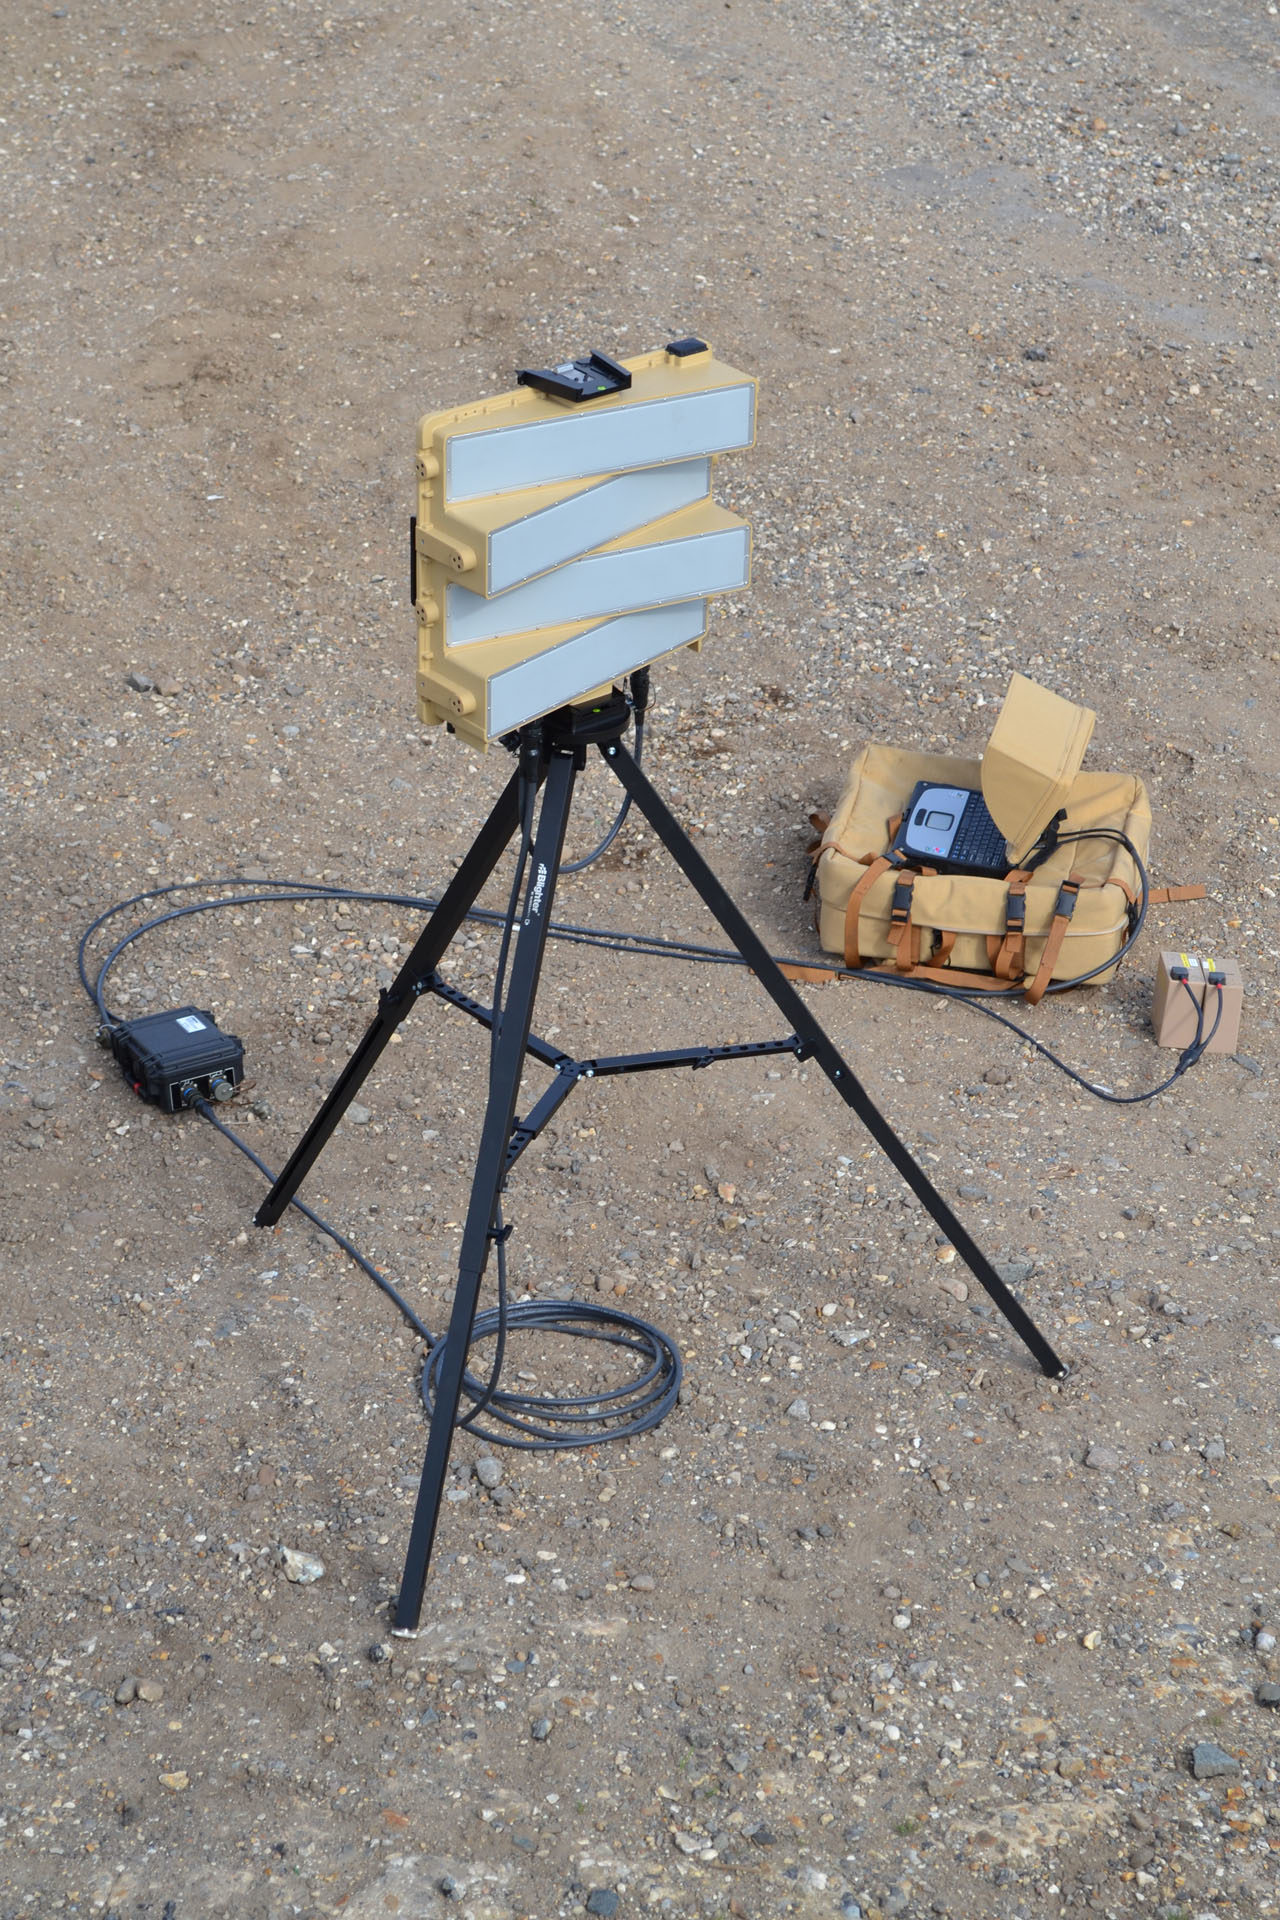 Blighter B202 Mk 2 Man Portable Ground Surveillance Radar on Tripod with Toughbook